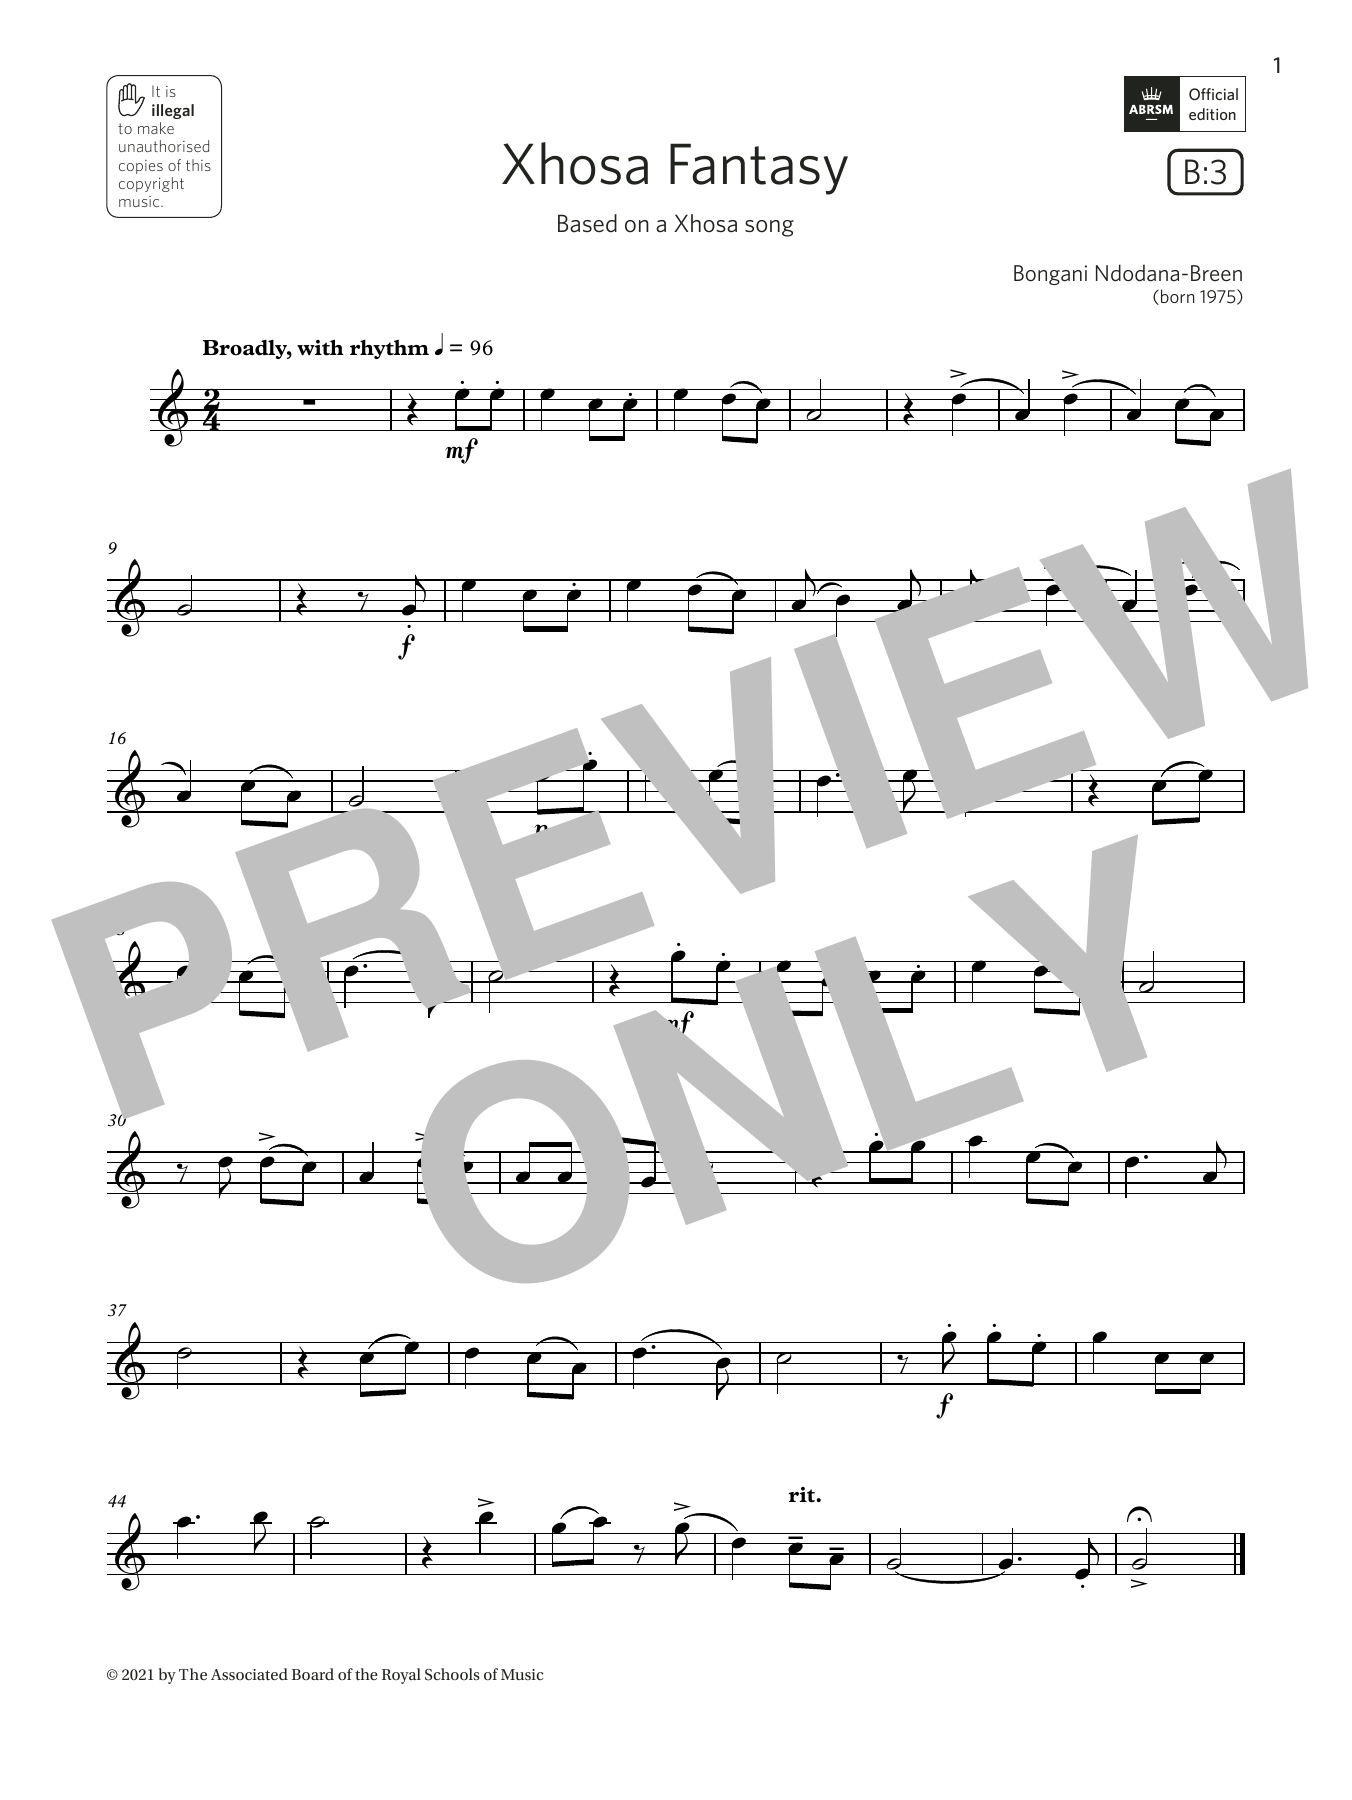 Bongani Ndodana-Breen Xhosa Fantasy (Grade 2 List B3 from the ABRSM Saxophone syllabus from 2022) Sheet Music Notes & Chords for Alto Sax Solo - Download or Print PDF